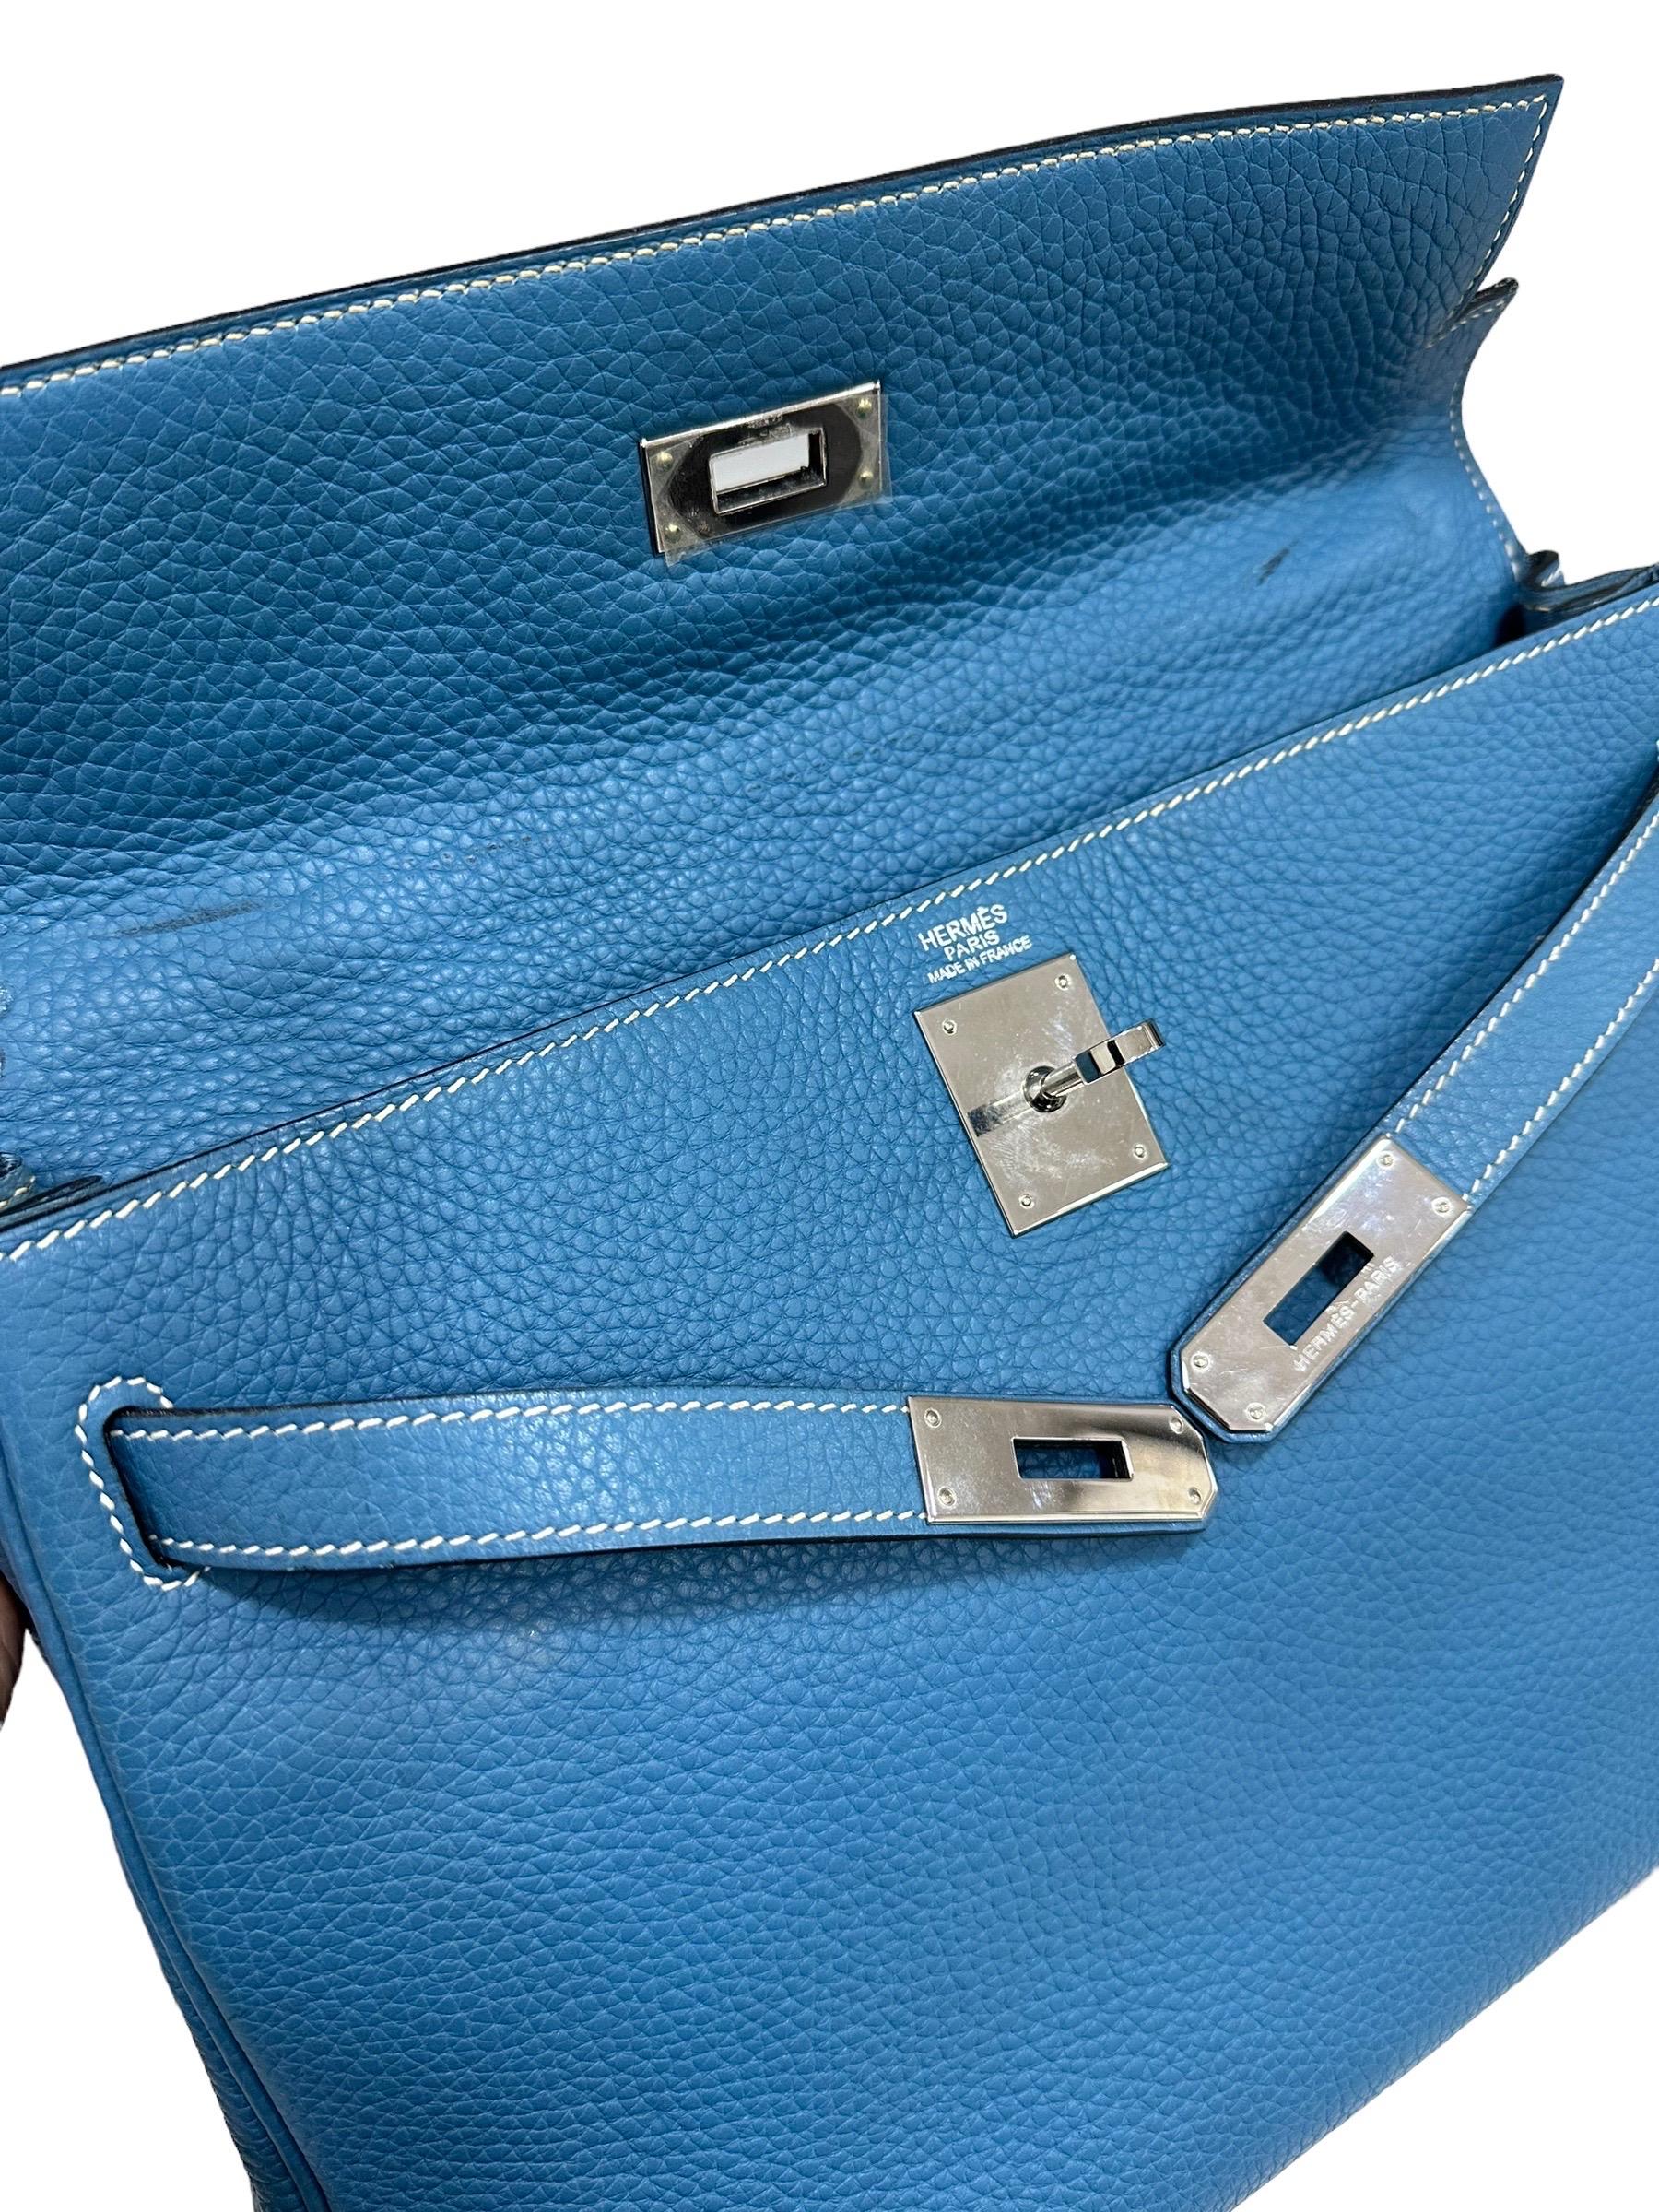 Hermès Kelly Bag 32 Clemence Leather Blue Izmir Top Handle Bag For Sale 9